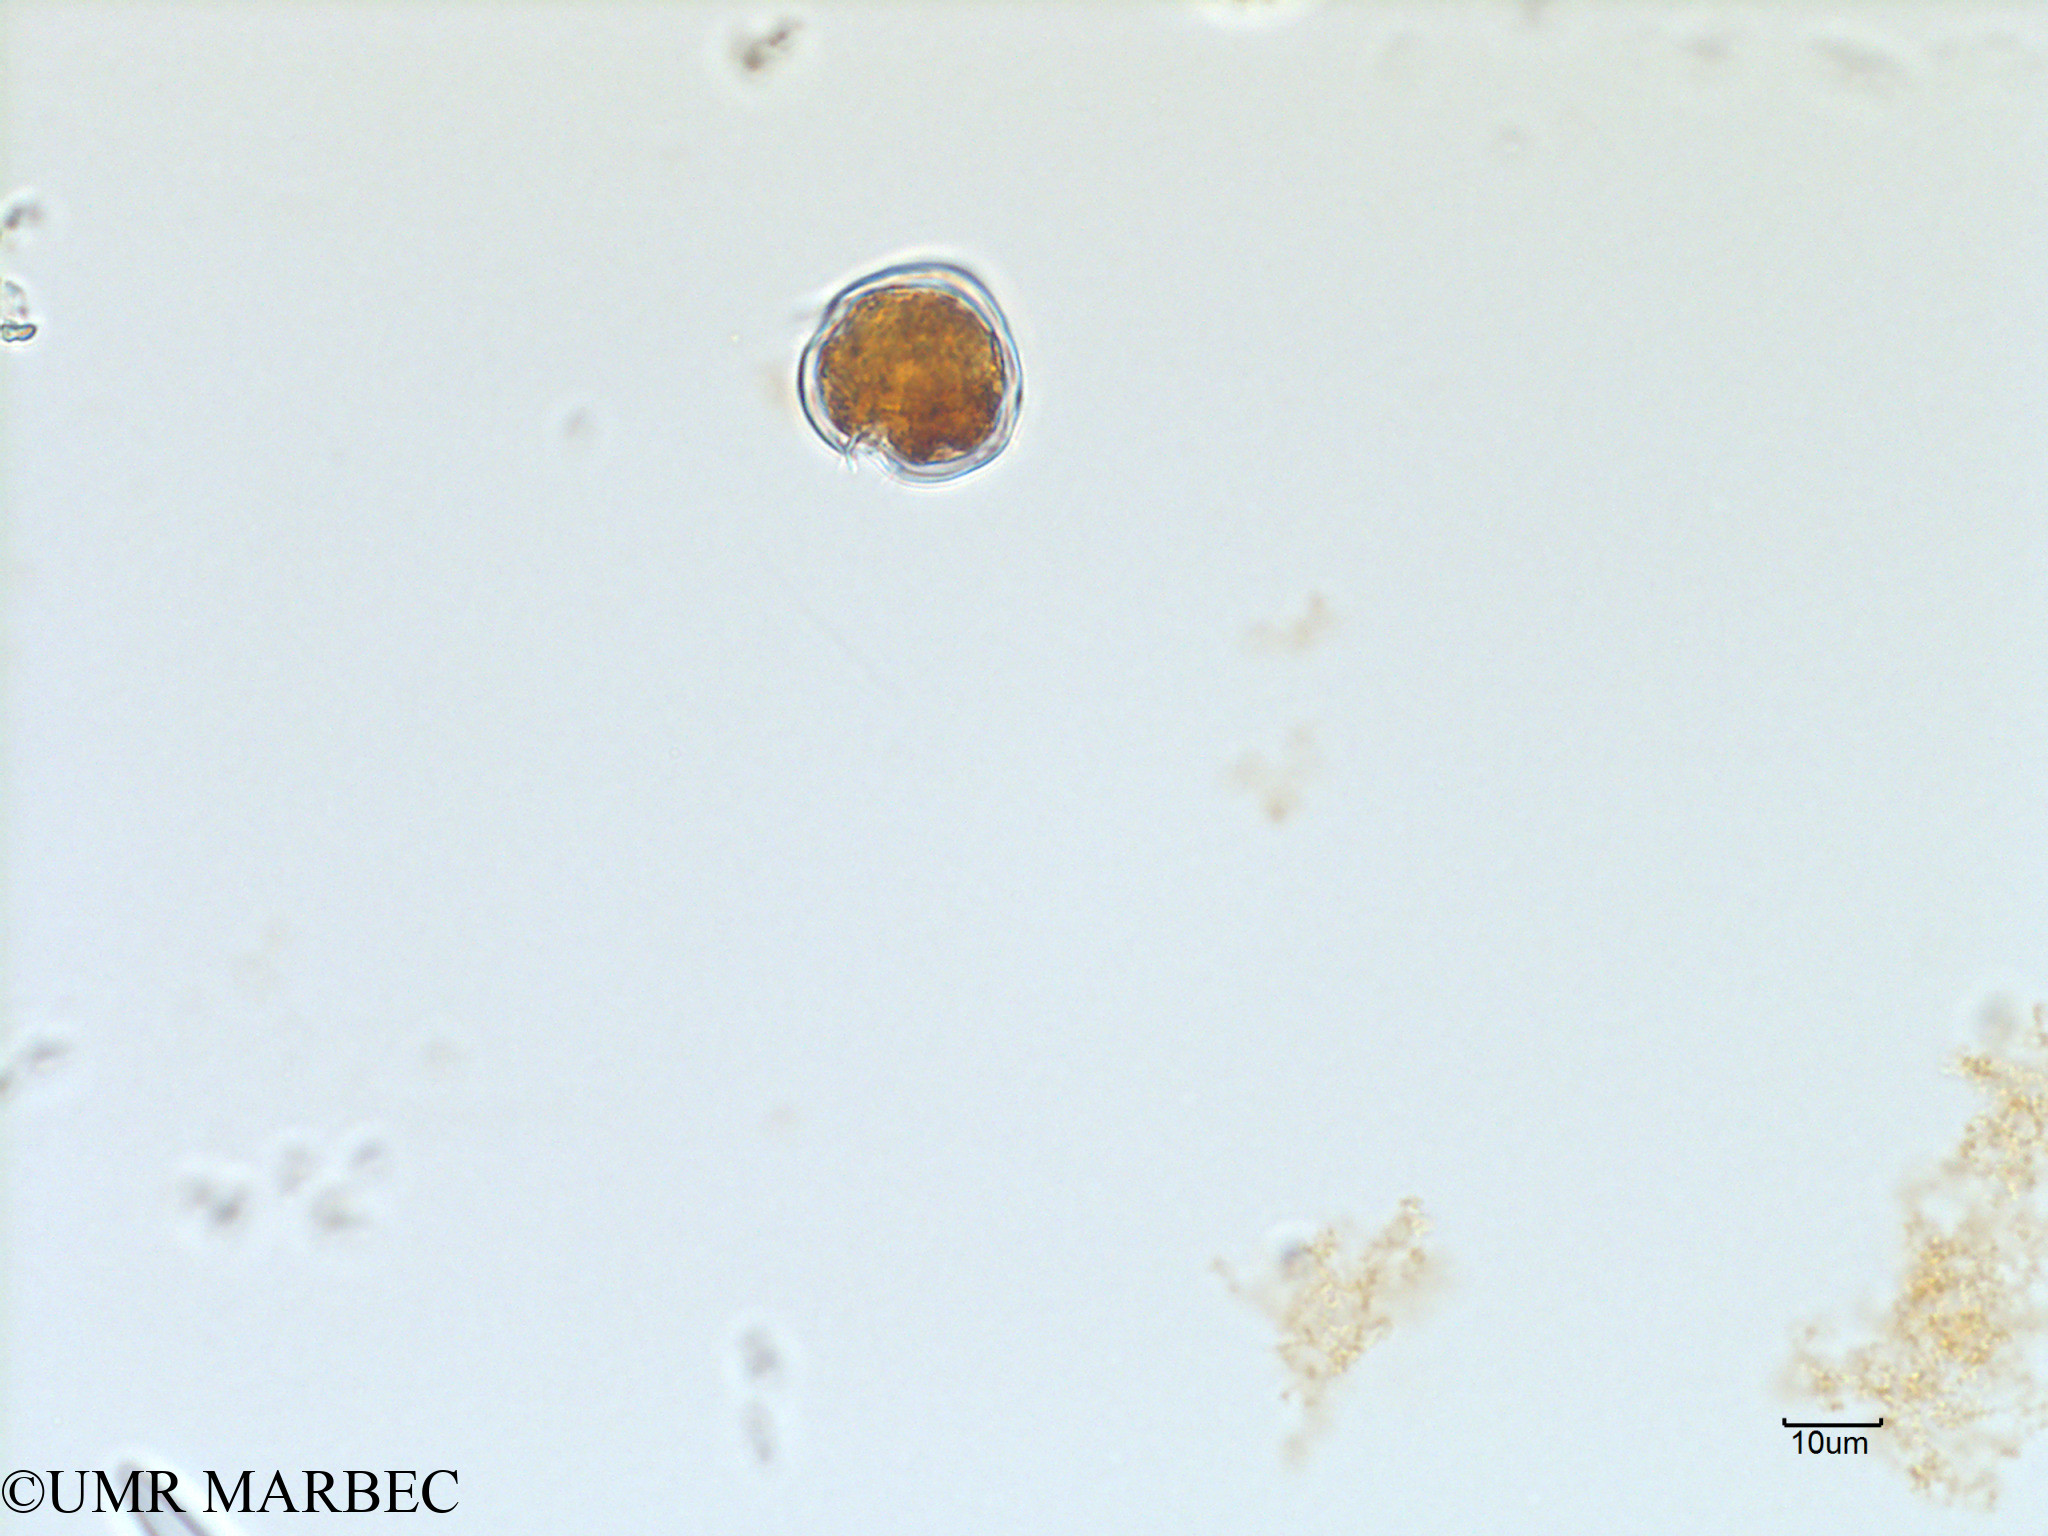 phyto/Scattered_Islands/iles_glorieuses/SIREME November 2015/Protoperidinium spp ( A VERIFIER-SIREME-Glorieuses2015-ech4-231116-photo3)(copy).jpg